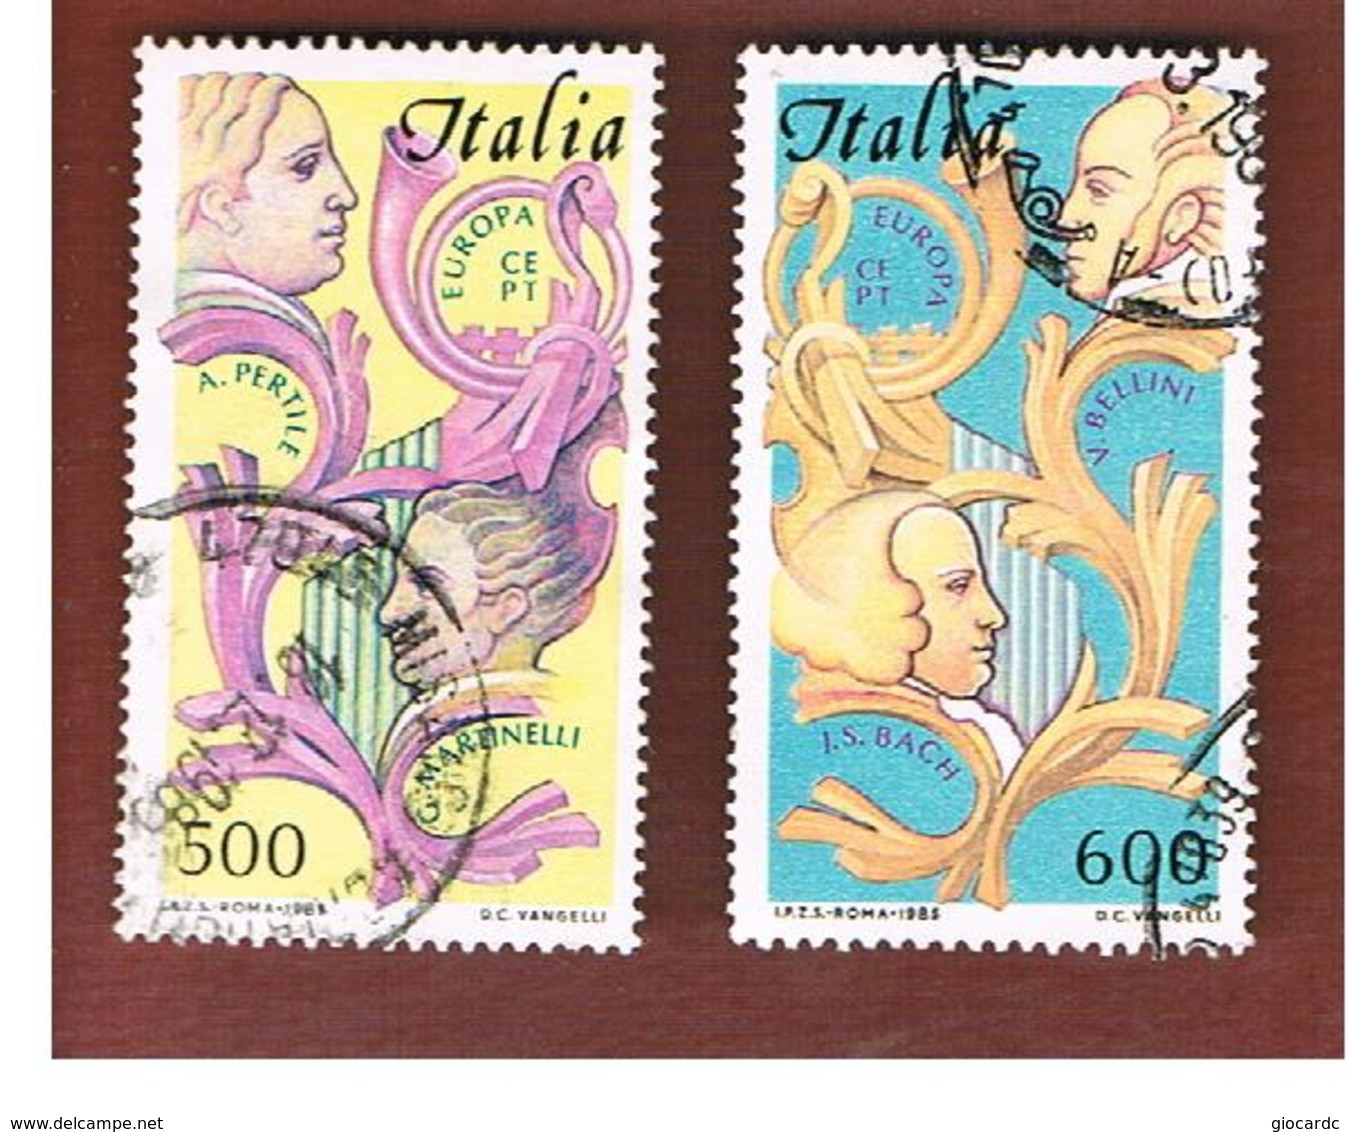 ITALIA REPUBBLICA  - UNIF. 1735.1736    -      1985  EUROPA: MUSIC  (COMPLET SET OF 2)   -      USATO  - RIF. 30860.61 - 1981-90: Usados